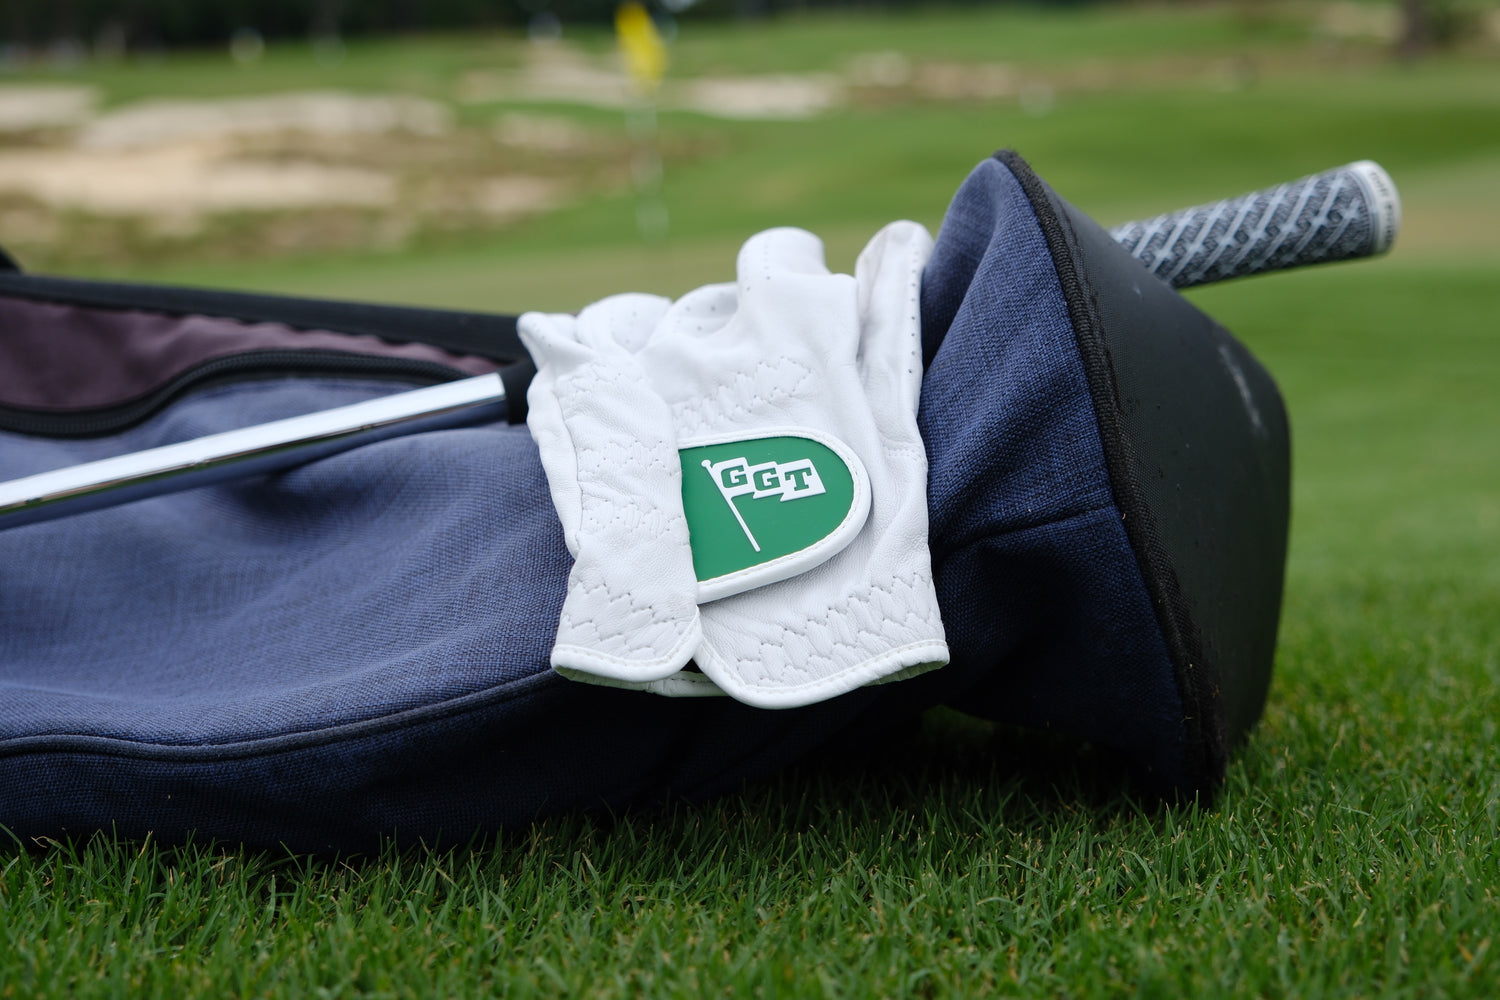 The Shrink golf glove on a bag